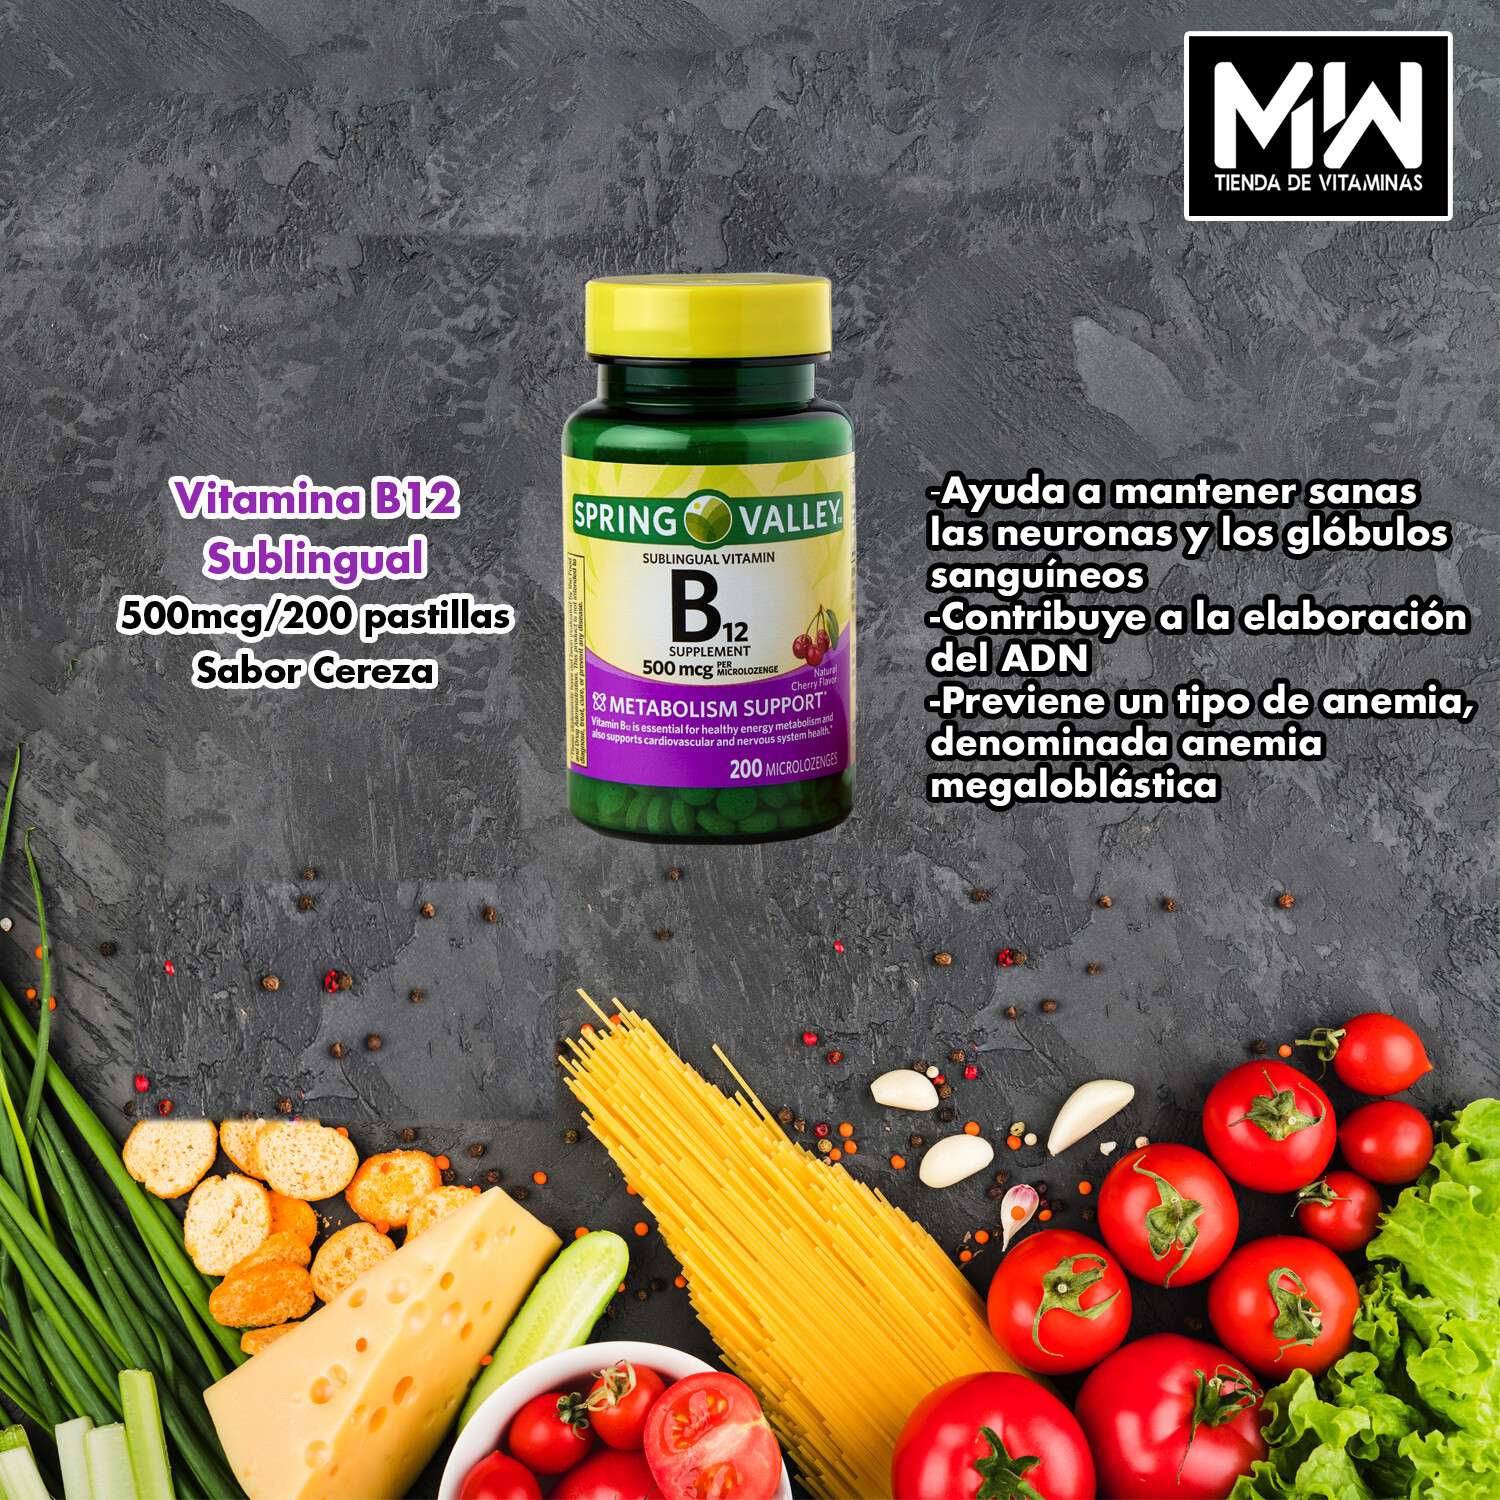 Vitamina B12 sublingual / Vitamin B12  500 mcg. 200 pastillas